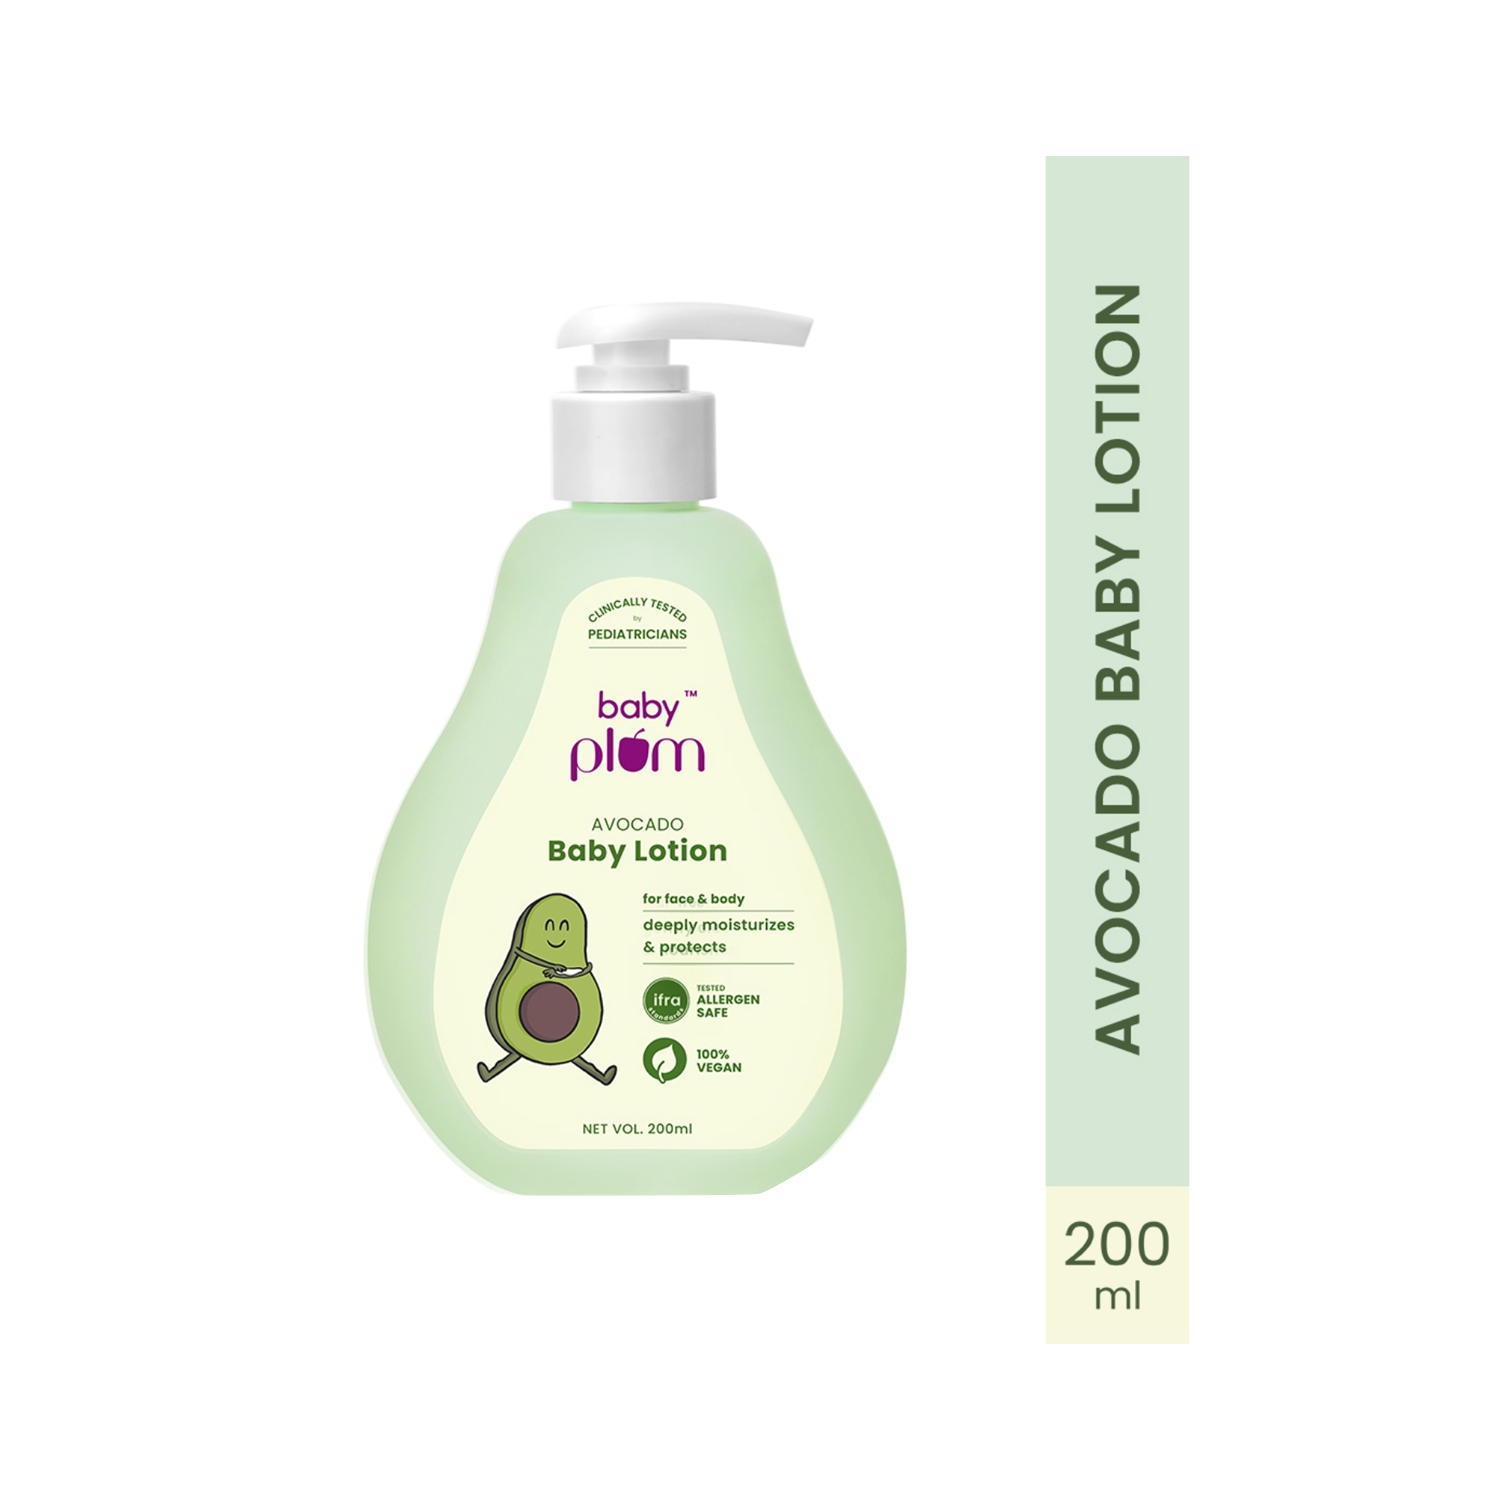 Plum | Baby Plum Avocado Baby Lotion (200ml)